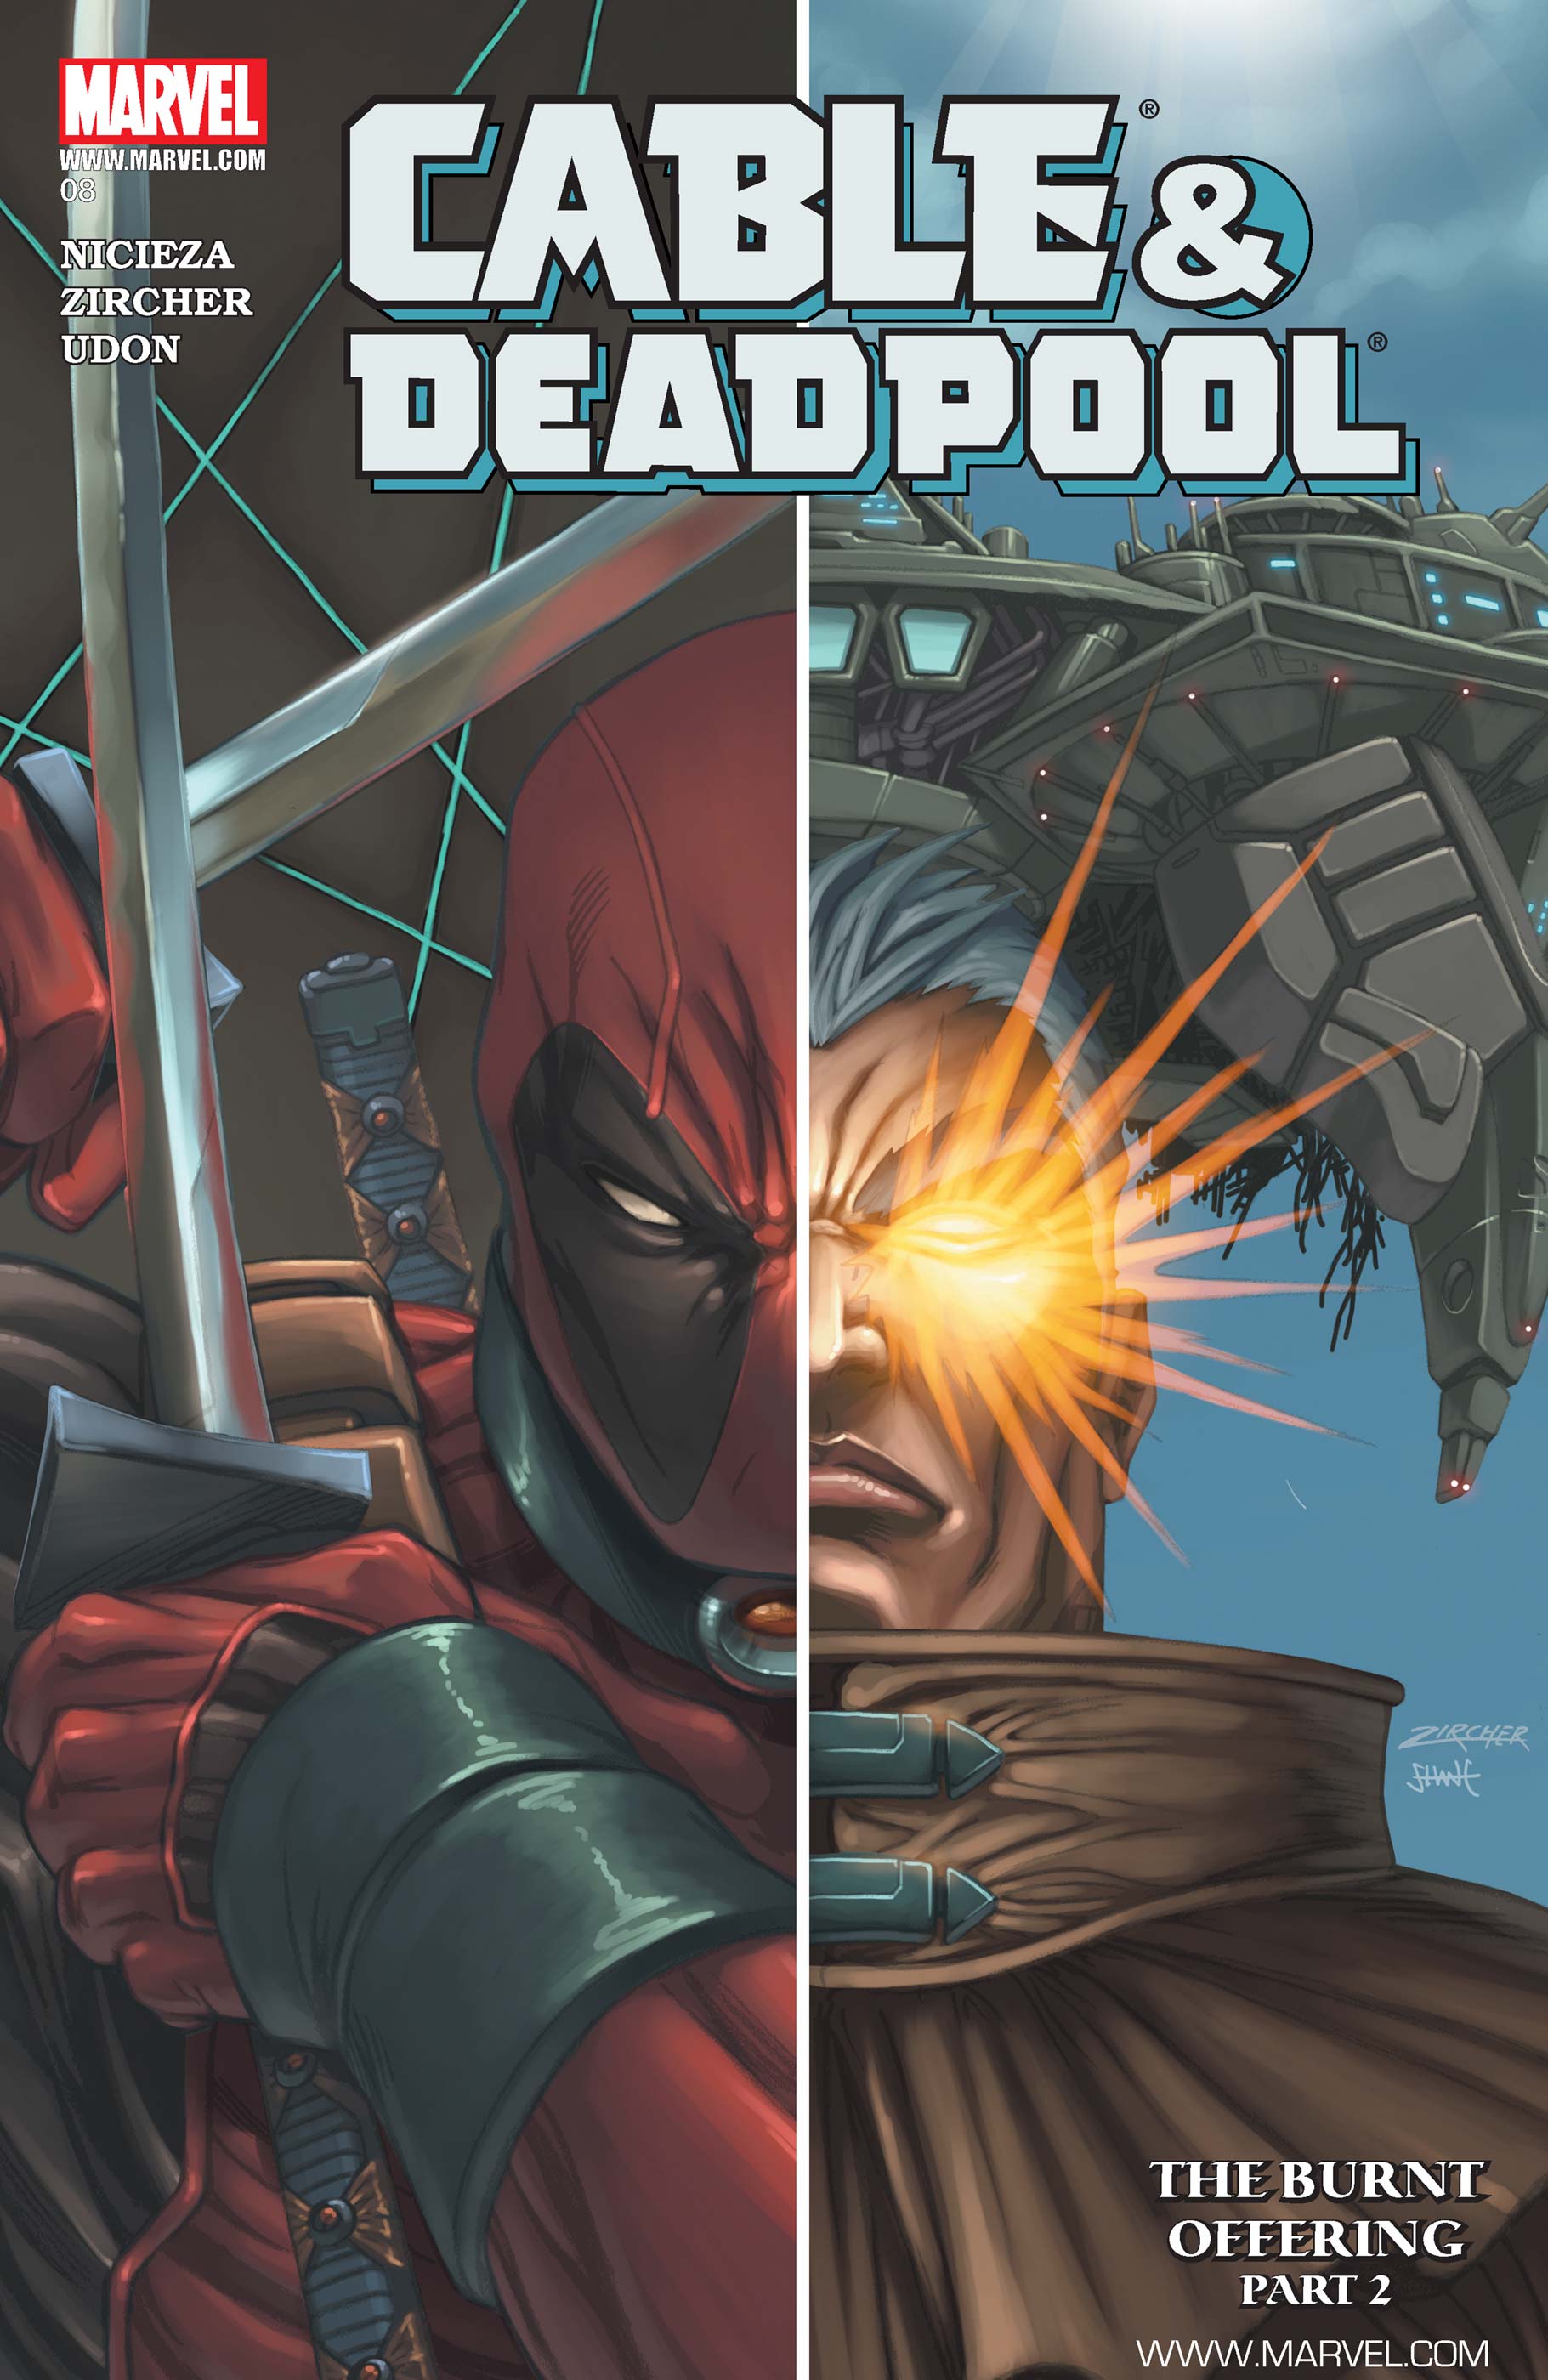 Cable & Deadpool (2004) #8